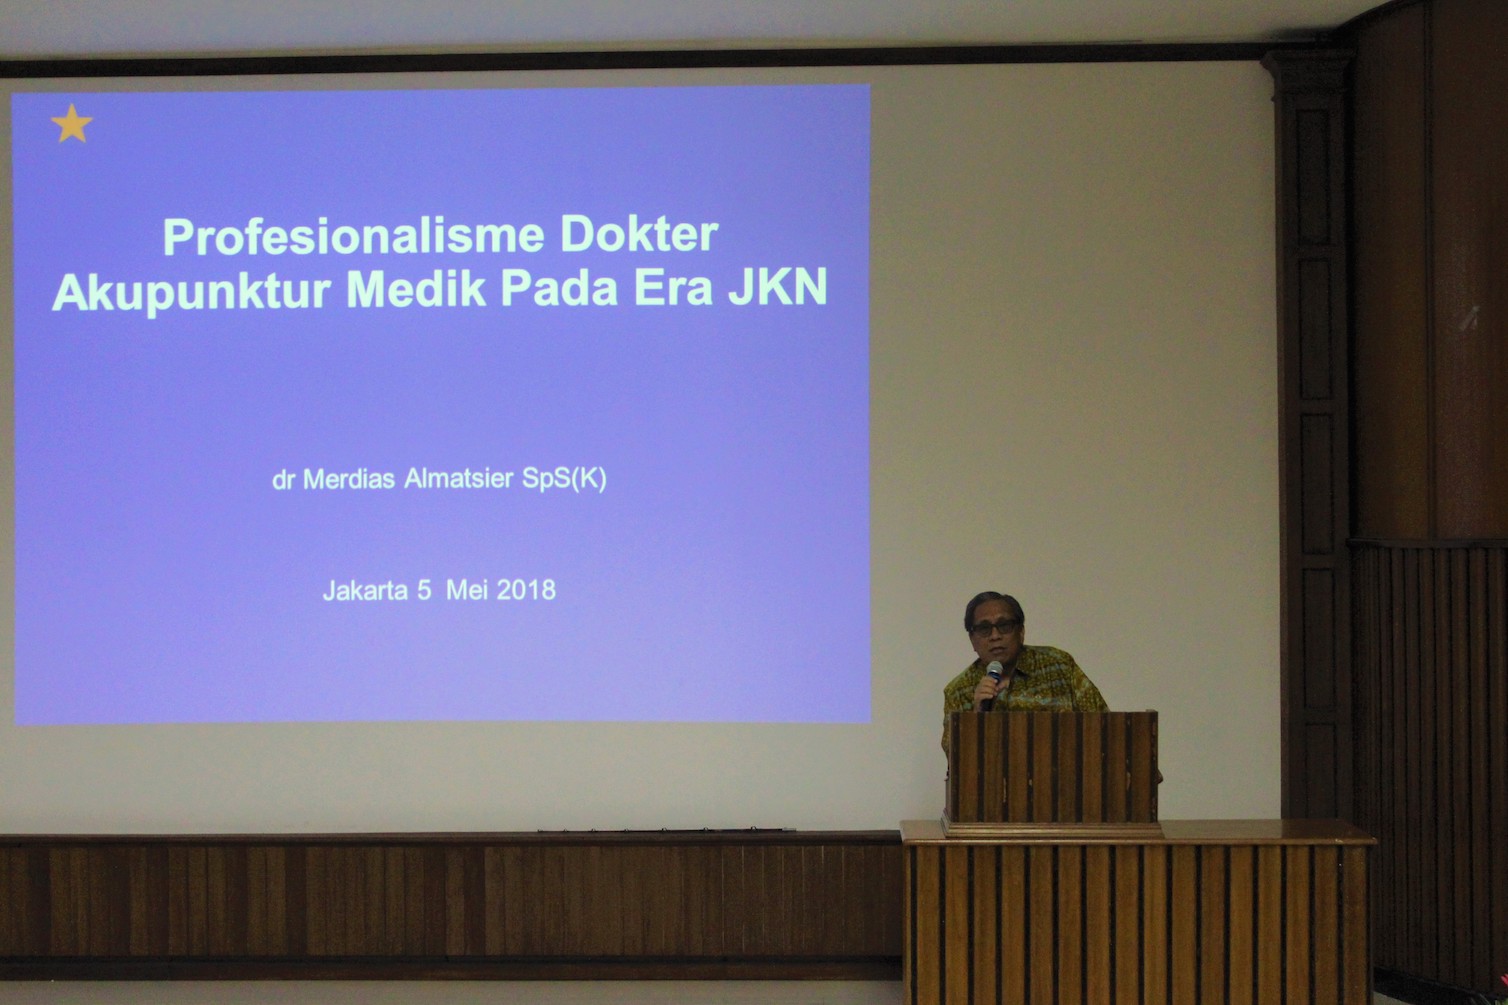 Peningkatan Peran Dokter Spesialis Akupunktur di Era JKN - 060518 - Perhimpunan Dokter Spesialis Akupunktur Medik Indonesia